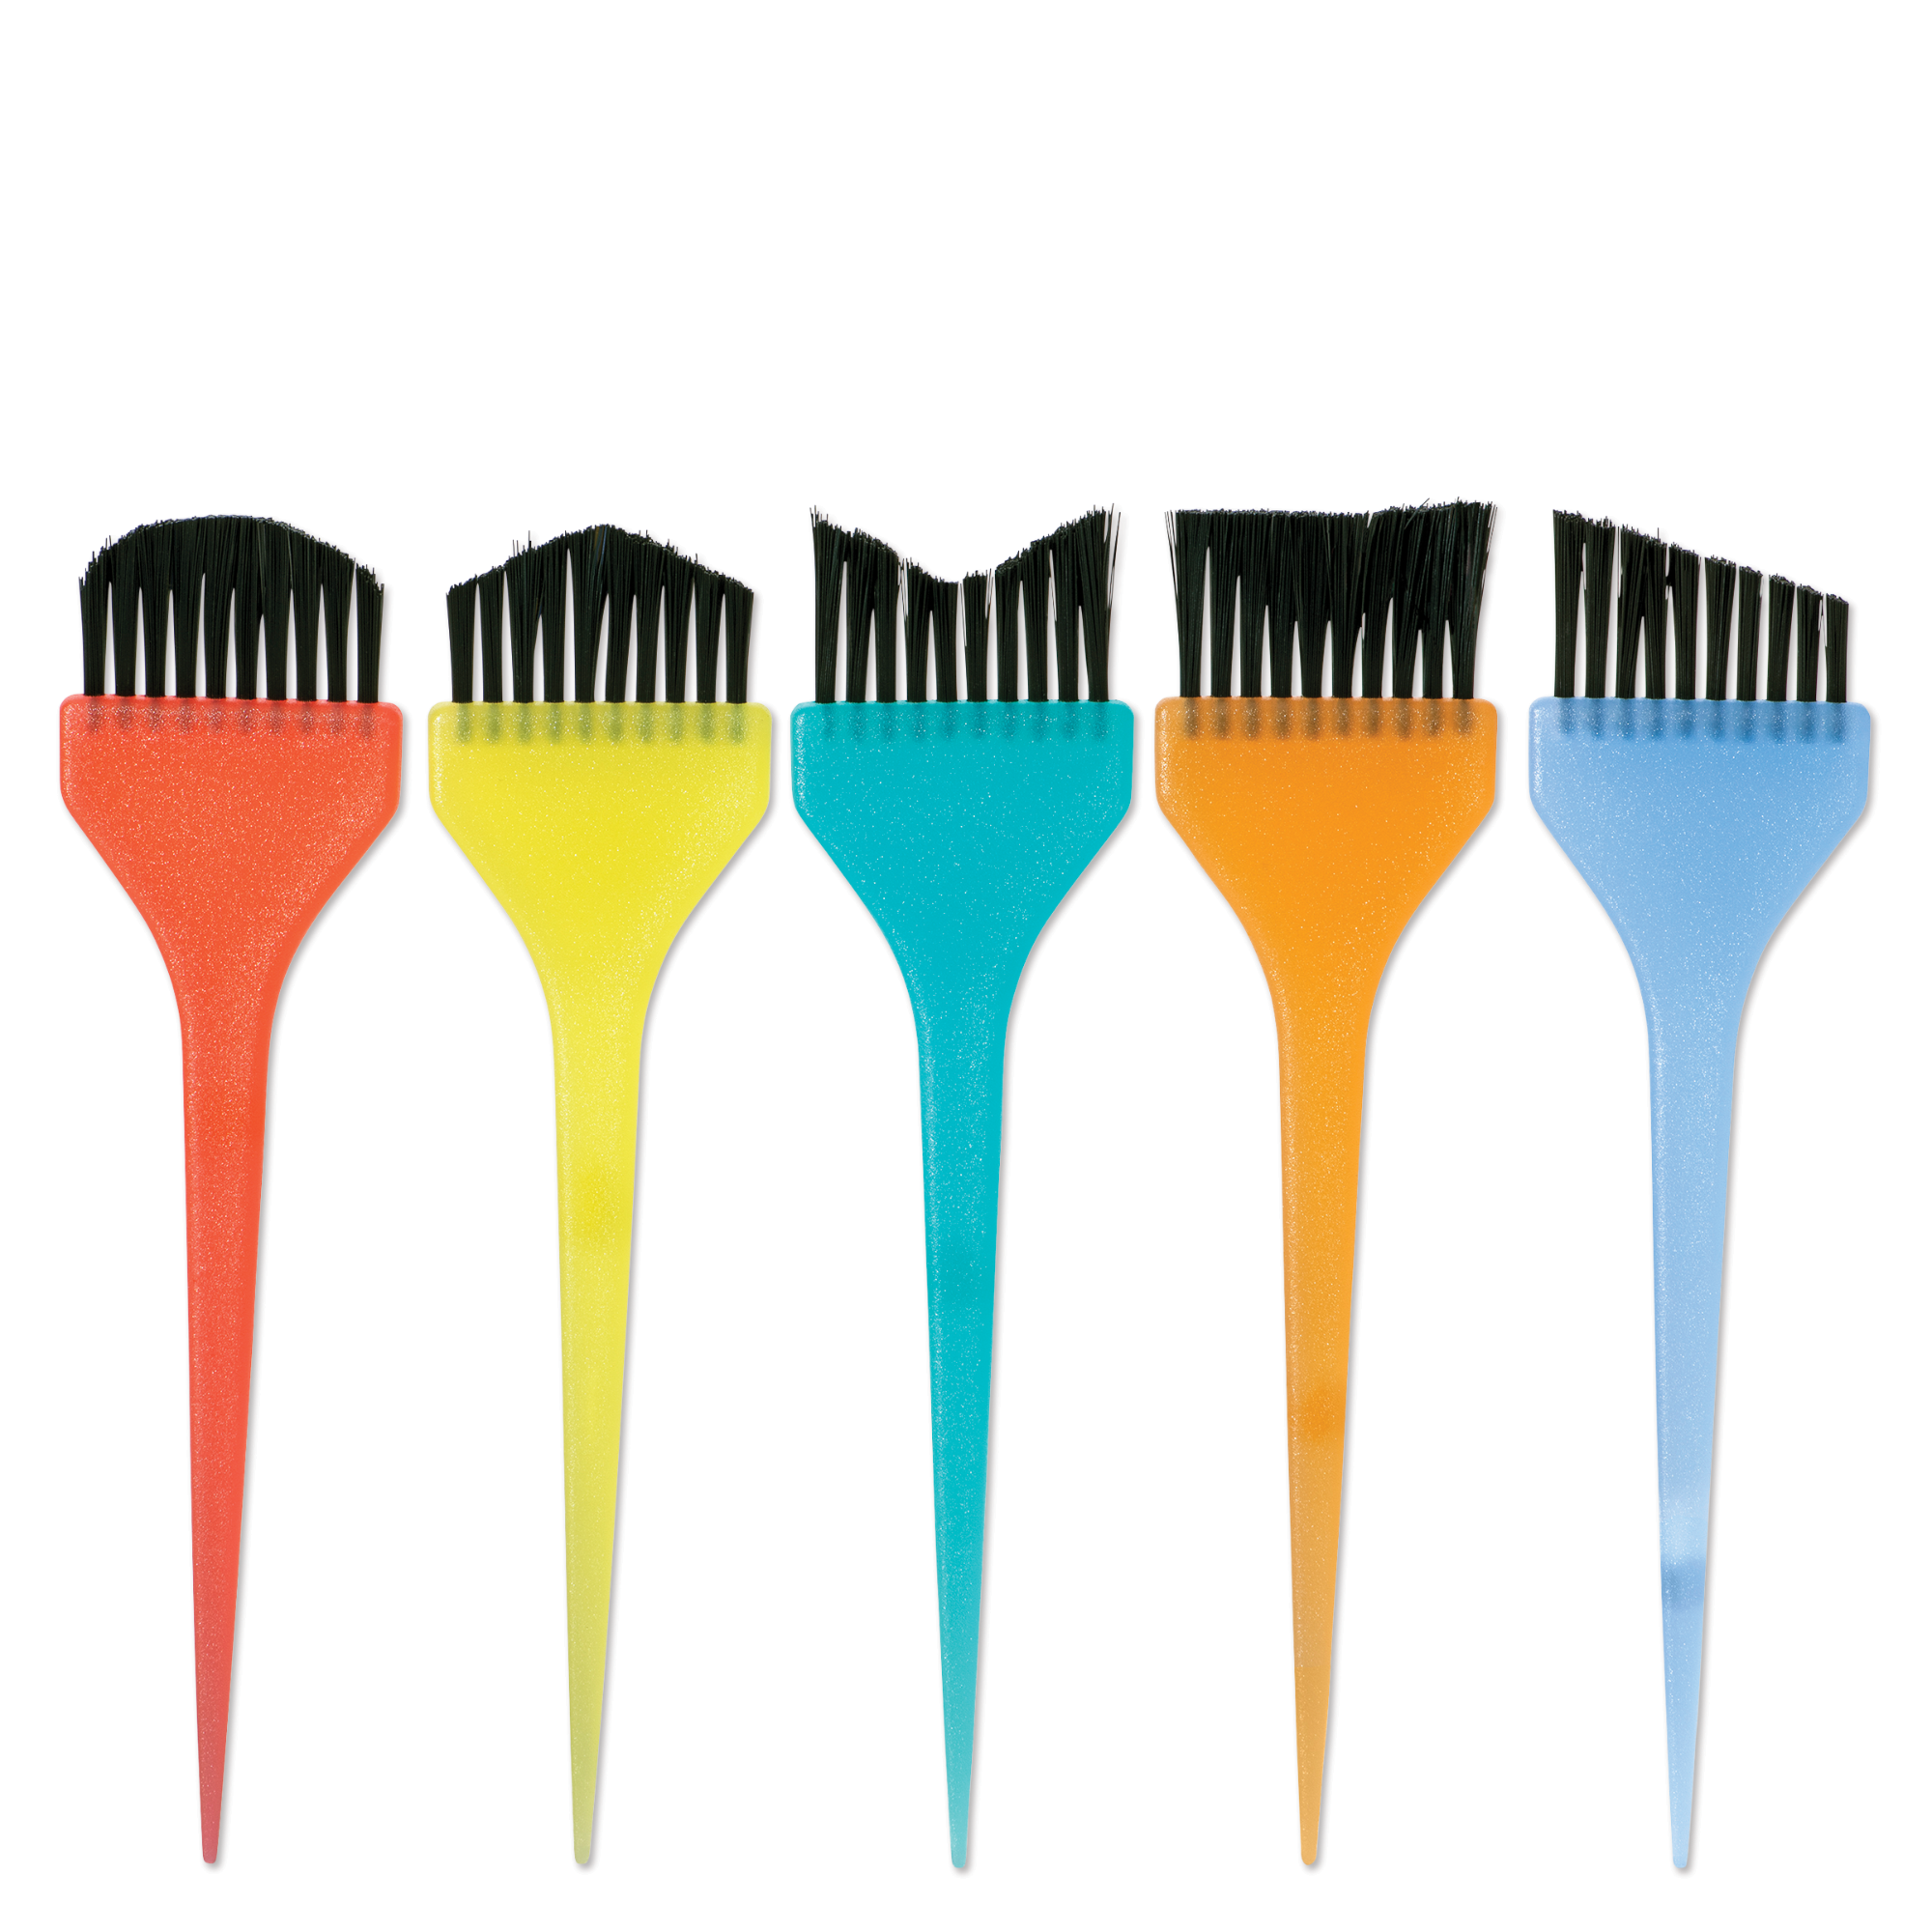 Hair Color Brush Set - 5 pc.